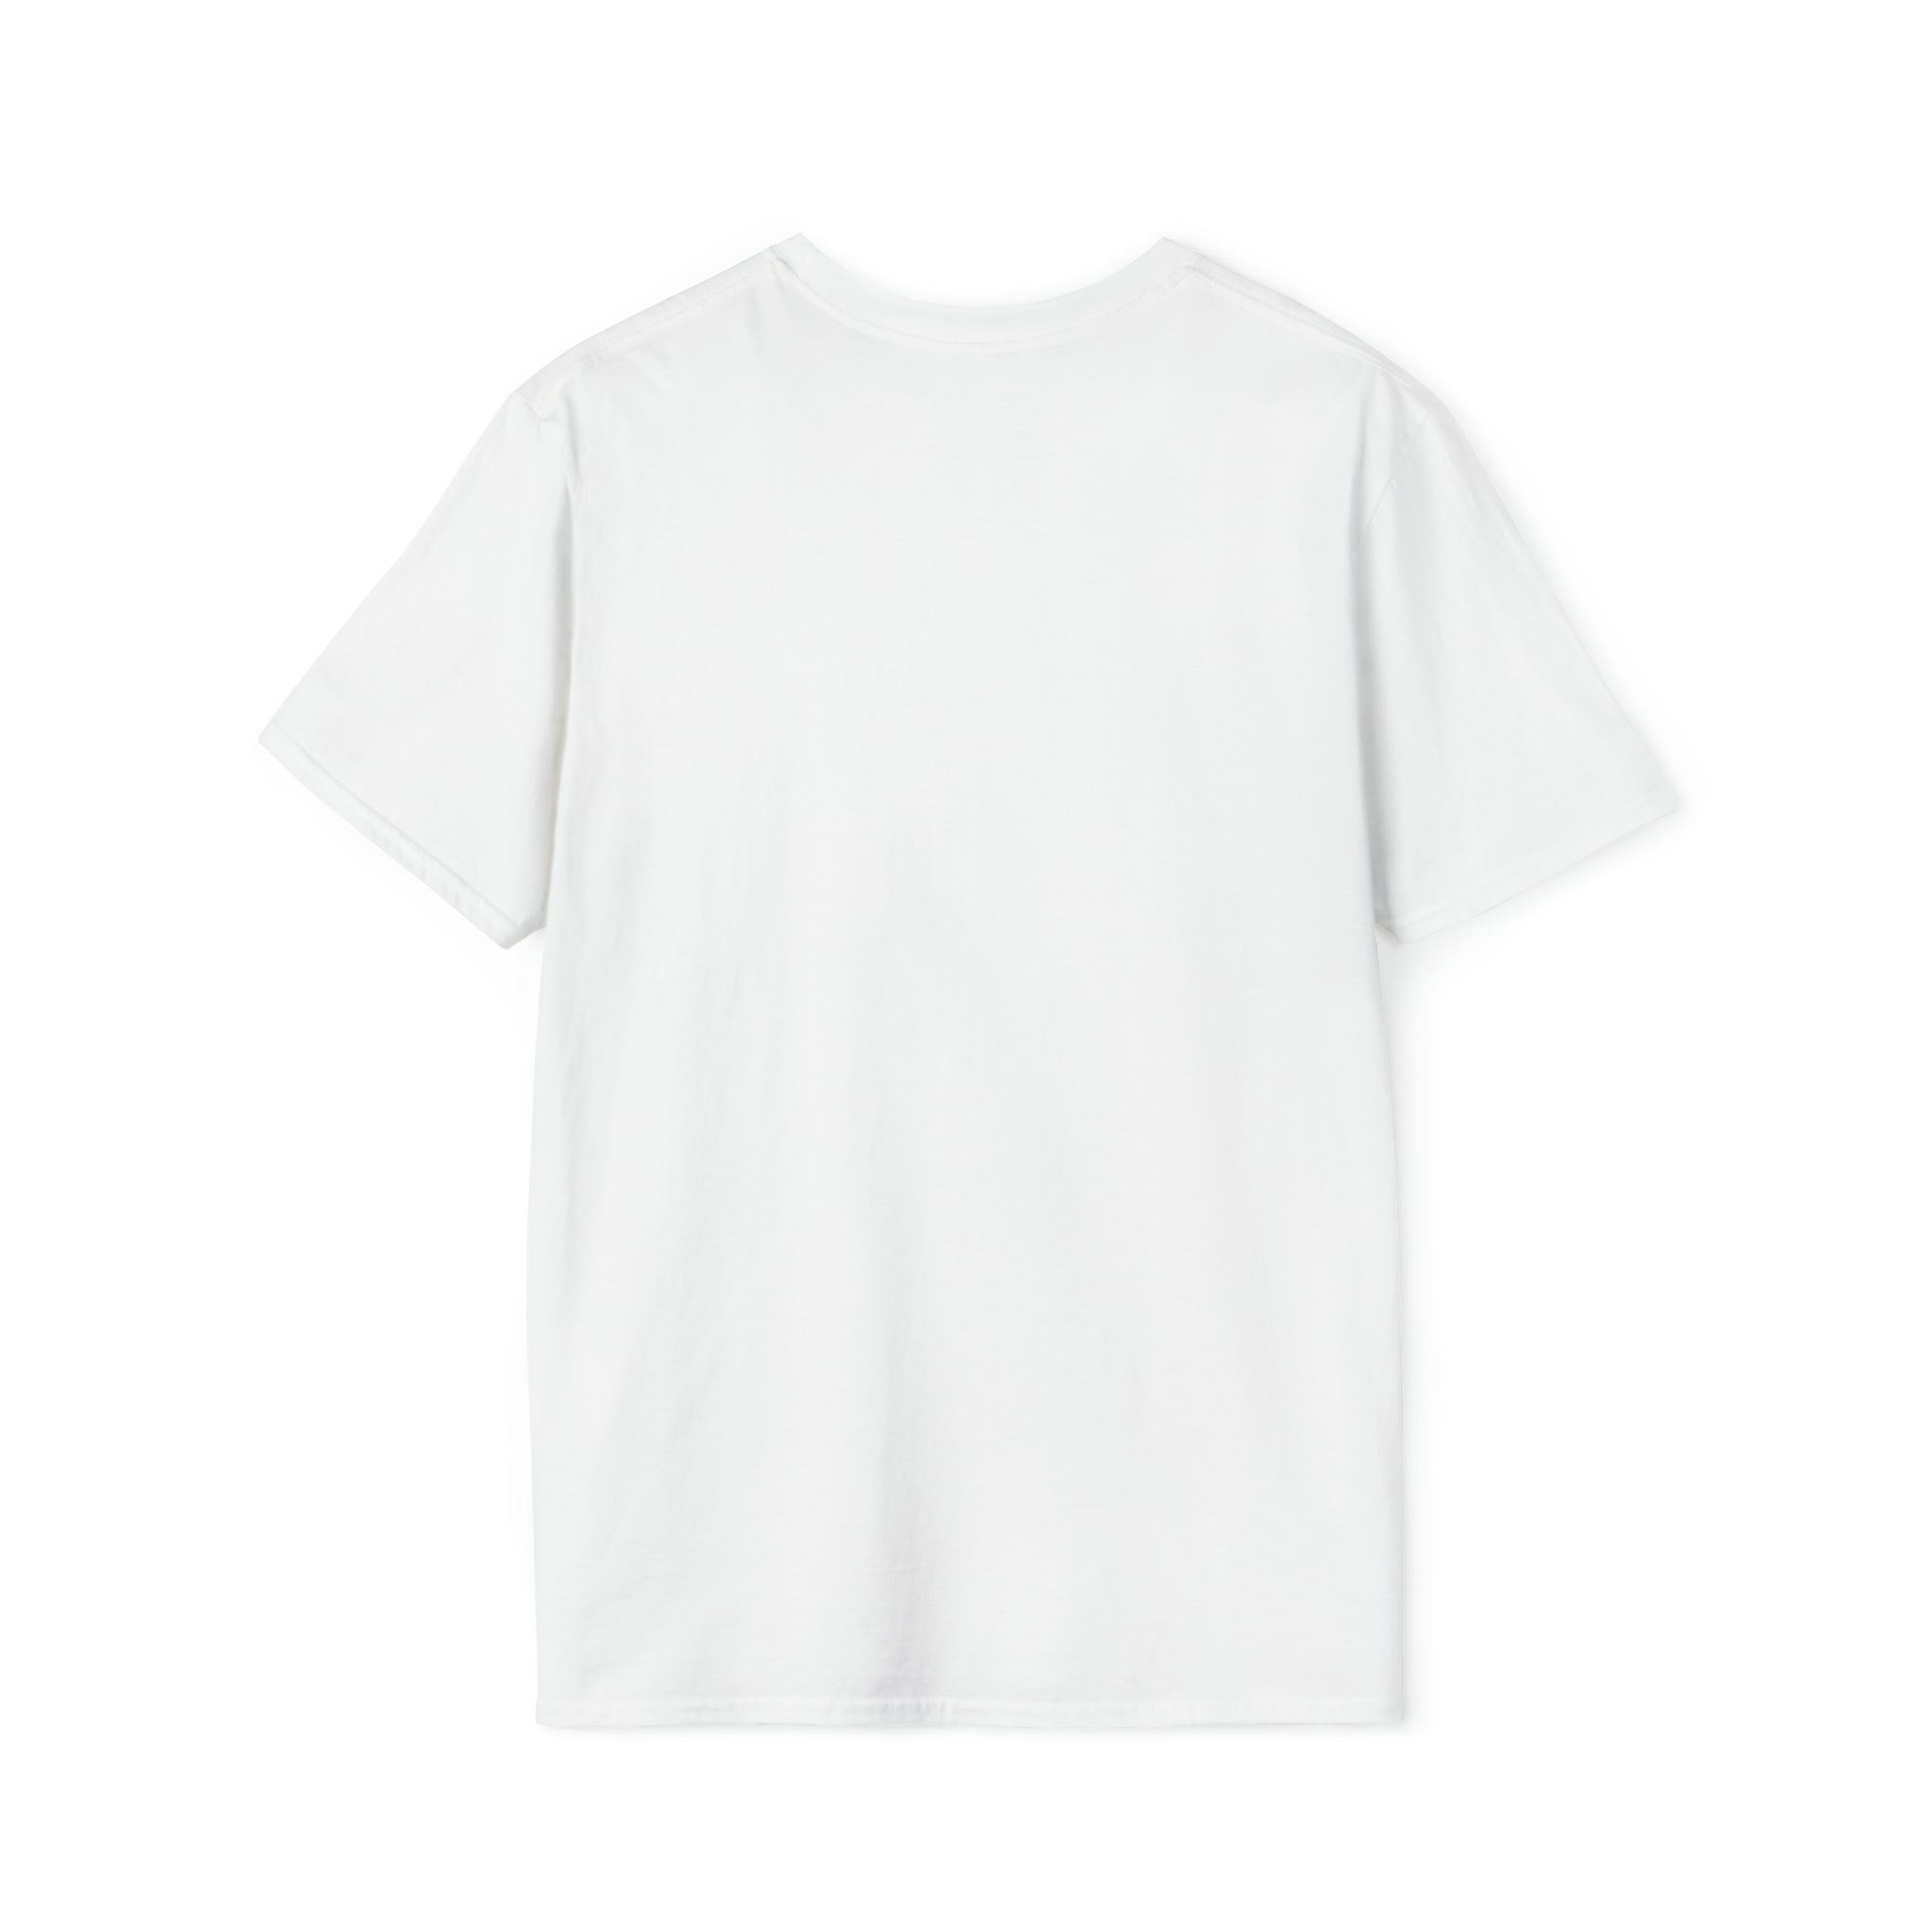 Deplorable Unisex Softstyle T-Shirt MAGA